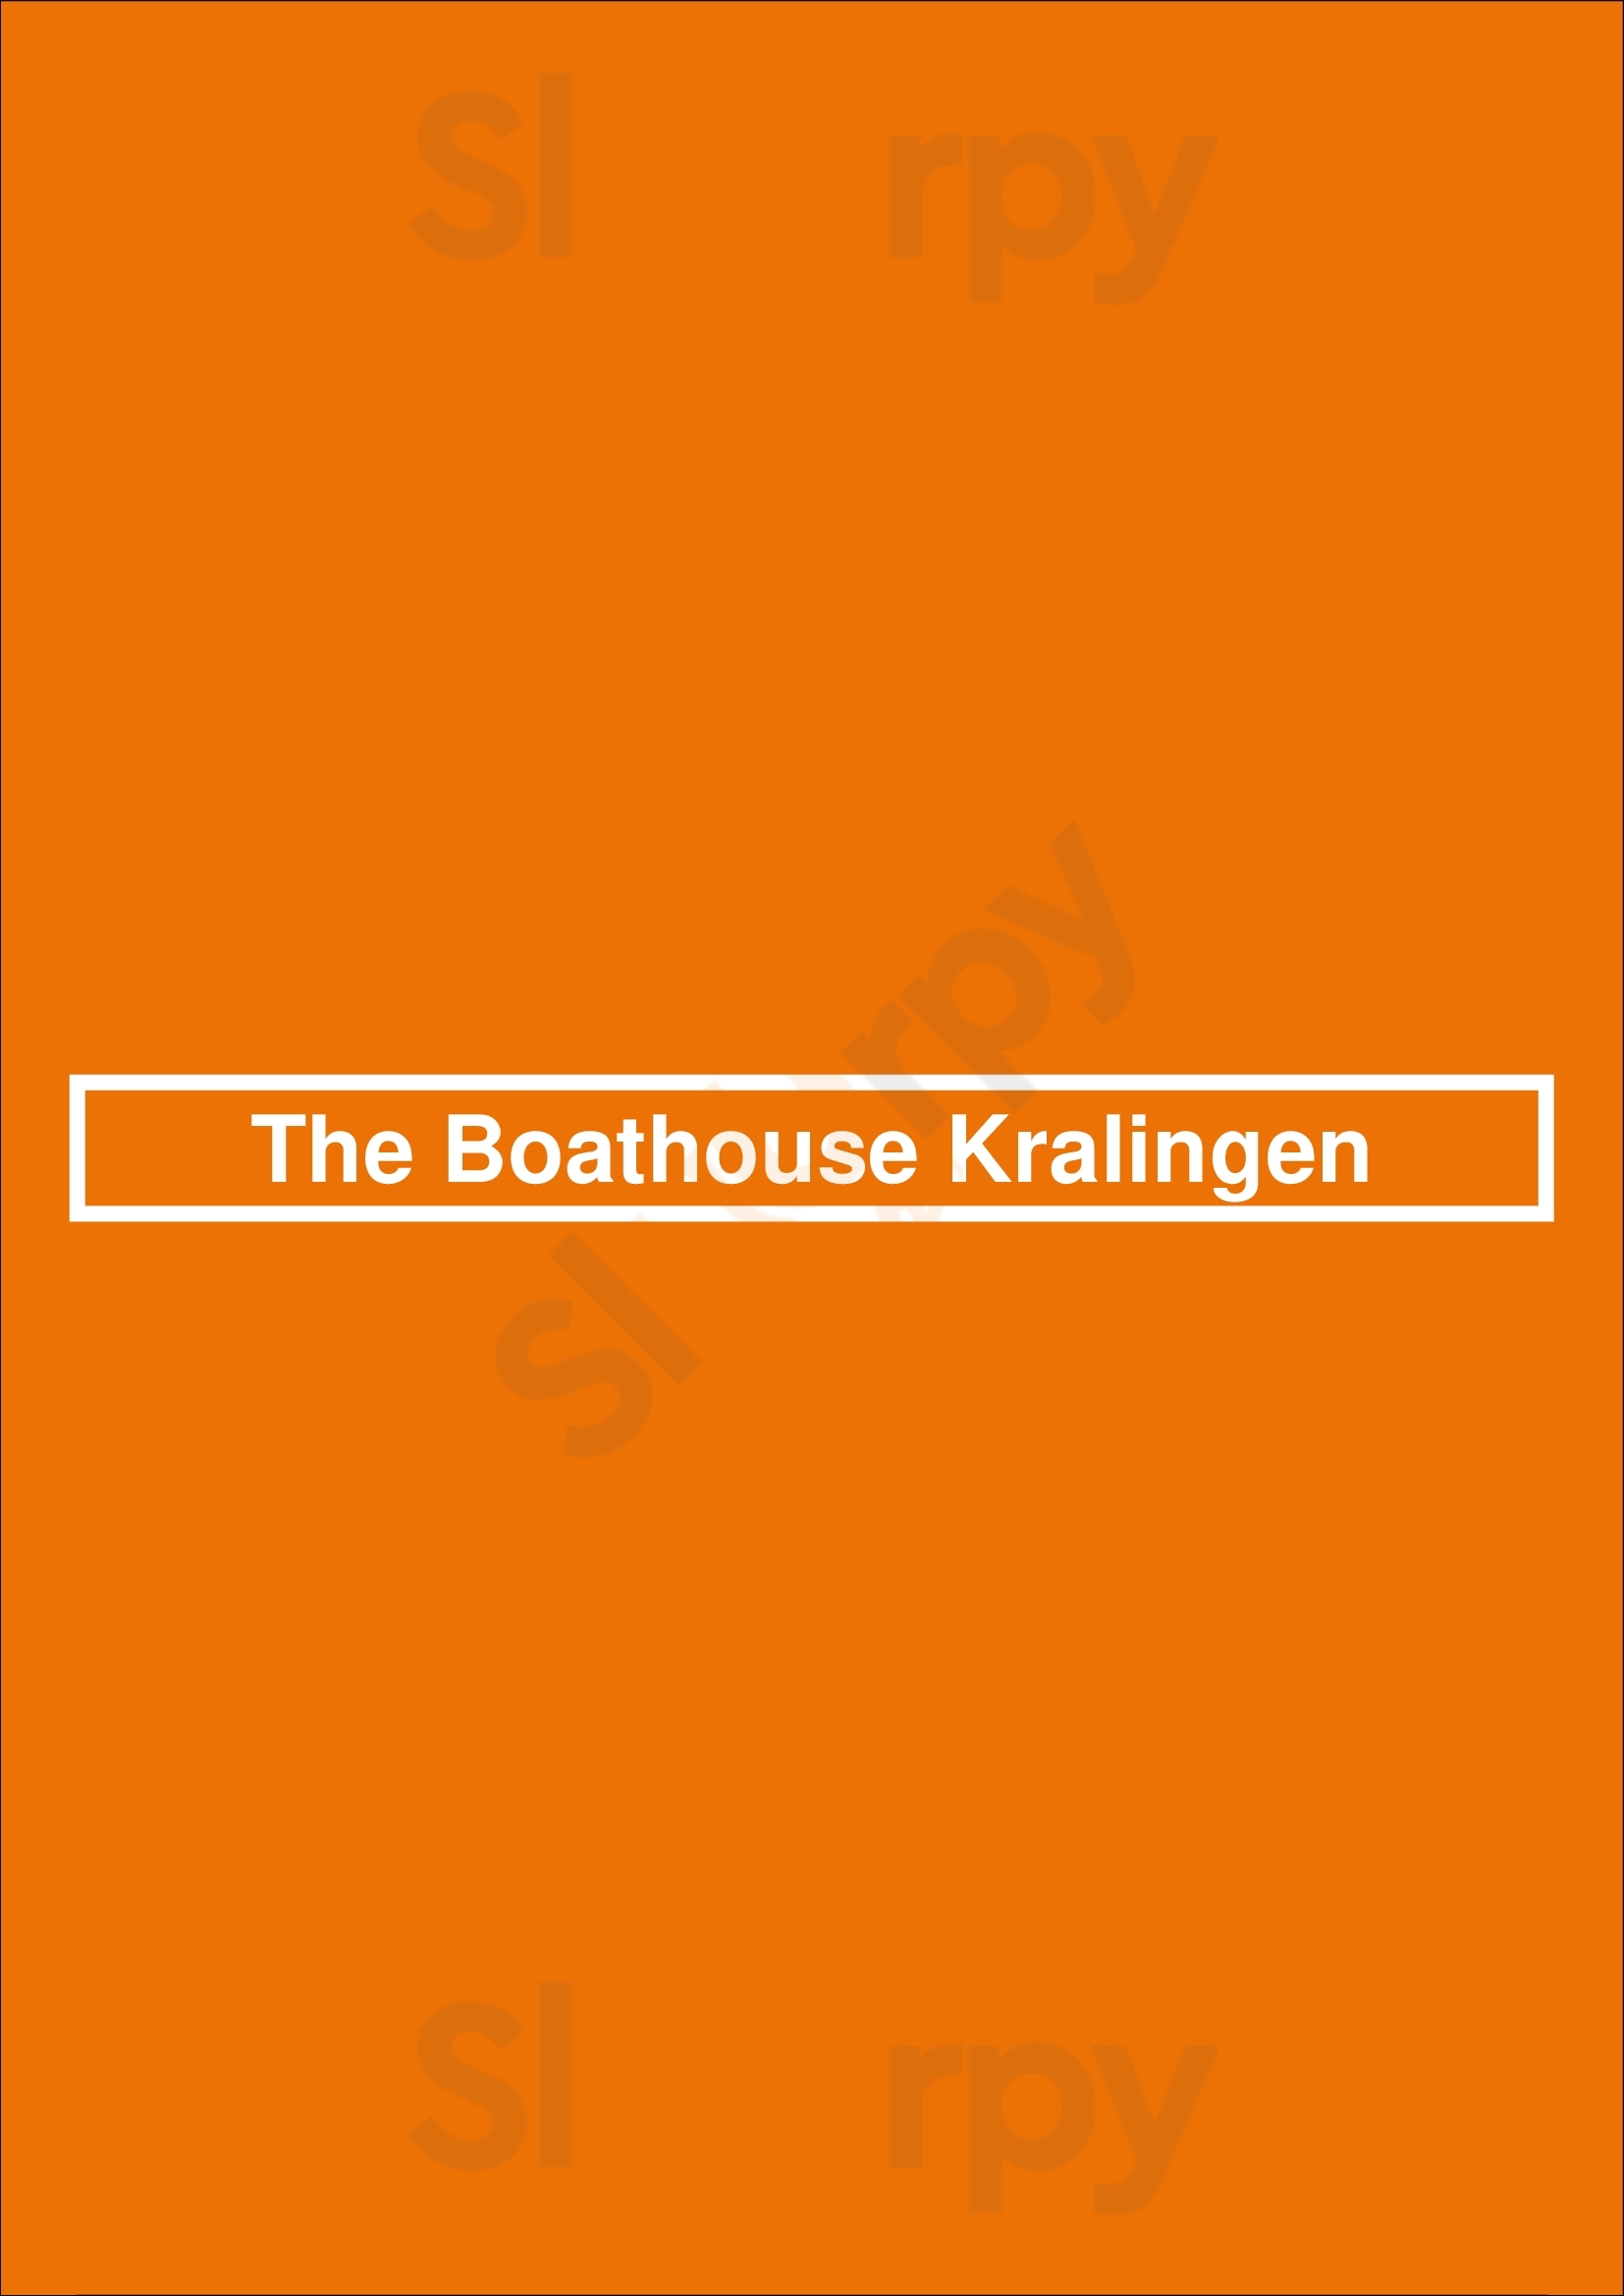 The Boathouse Kralingen Rotterdam Menu - 1